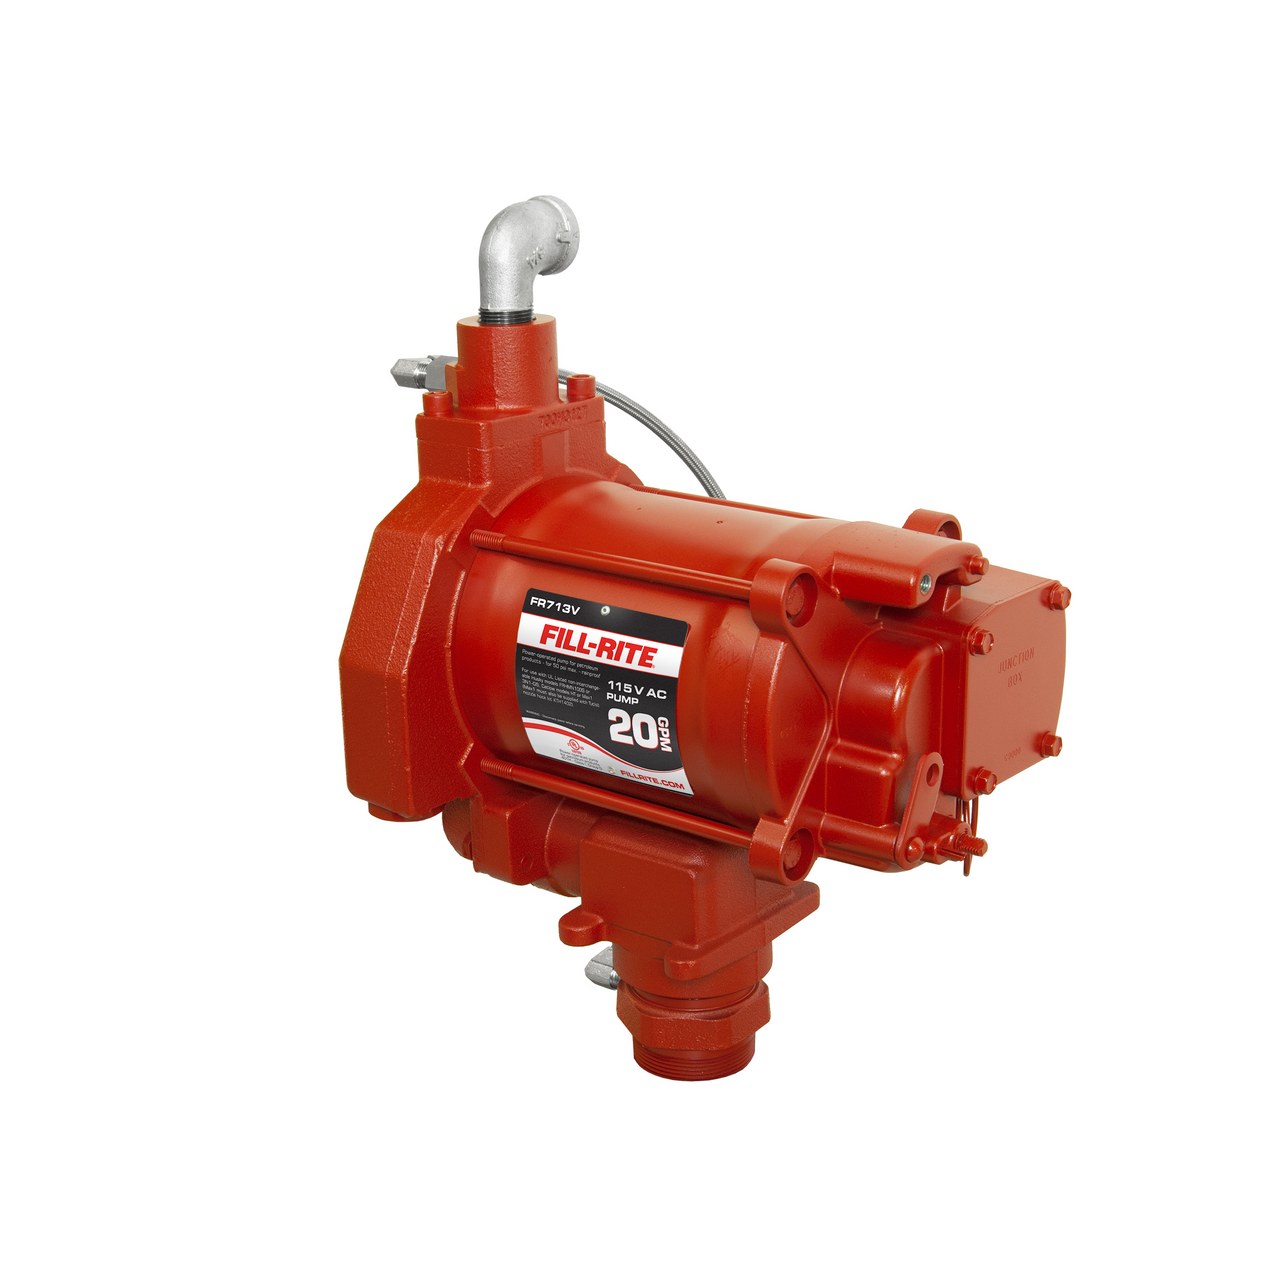 Fill-Rite FR311VB 115/230V AC High Flow Fuel Transfer Pump w/ Auto Nozzle &  Meter - 35 GPM